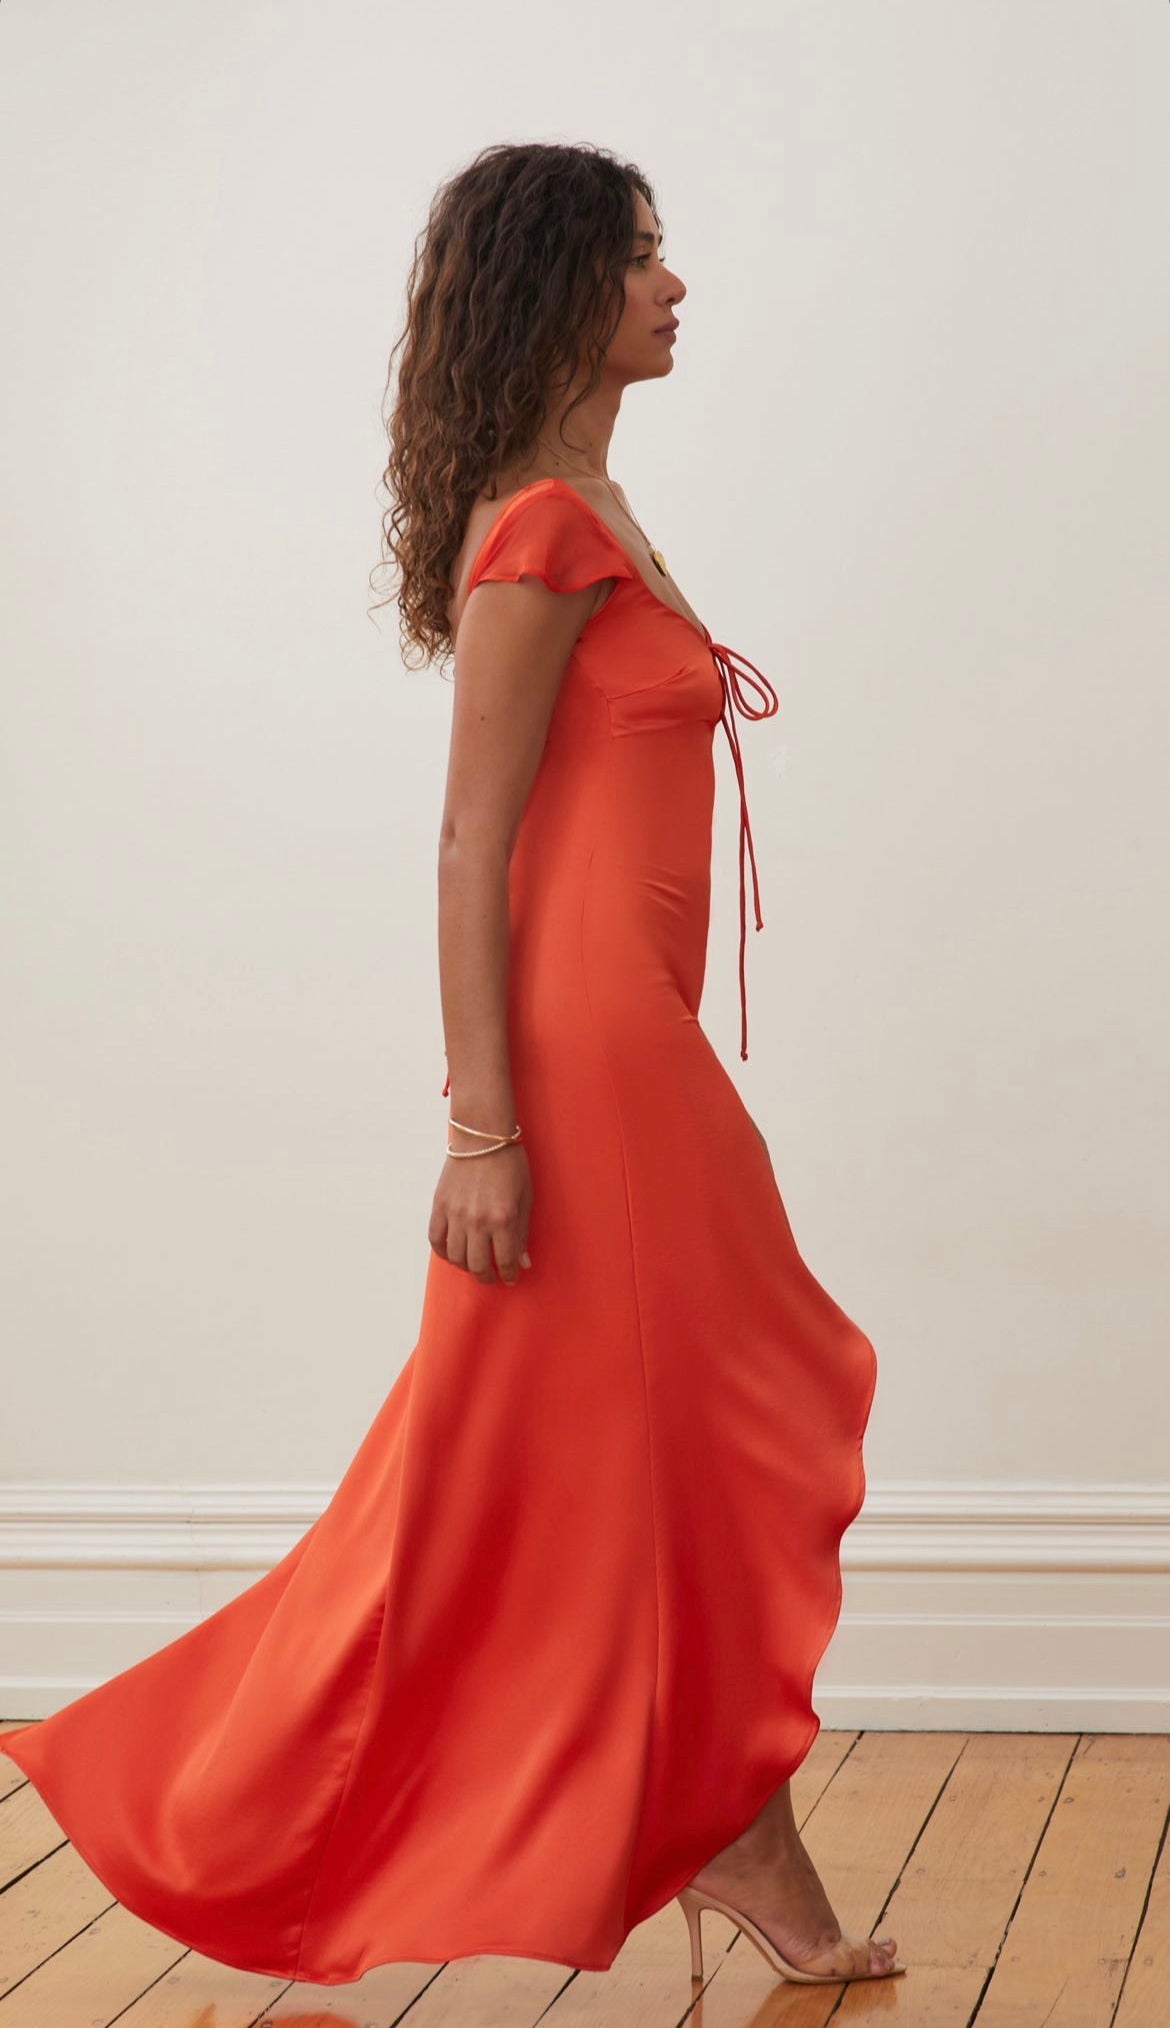 Arcina Ori - Savana Dress in Fiery Orange Hue